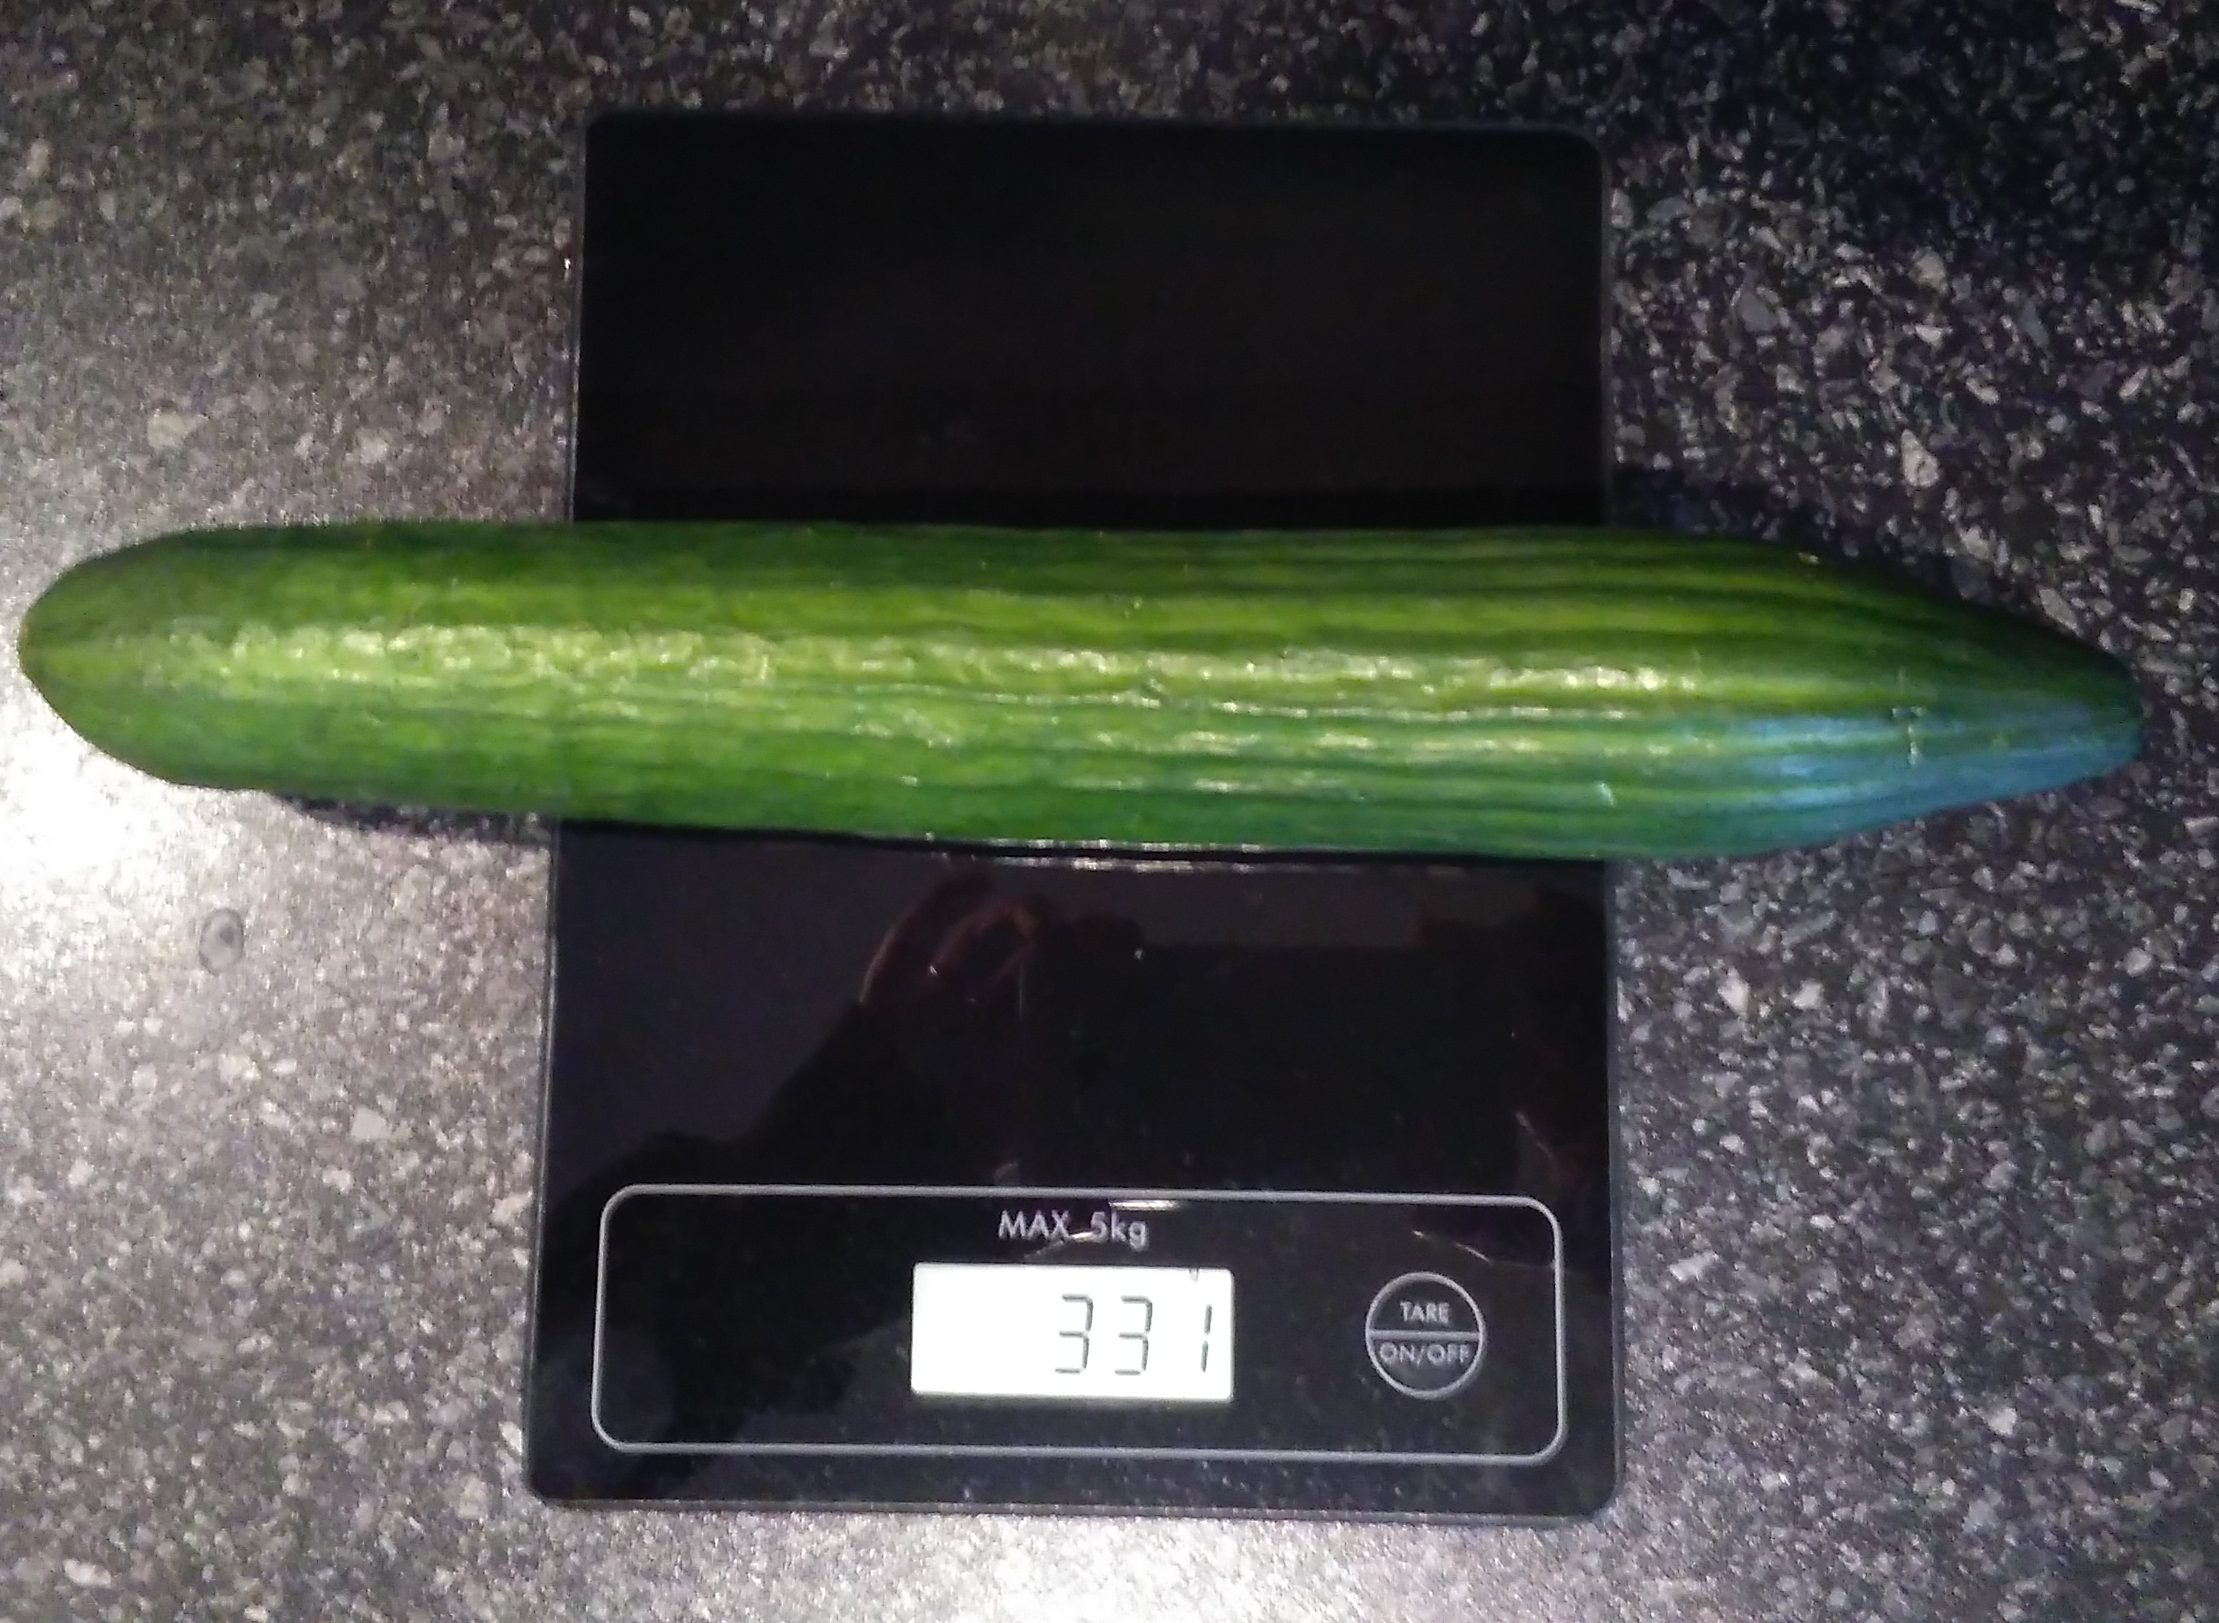 Cucumber being weighed